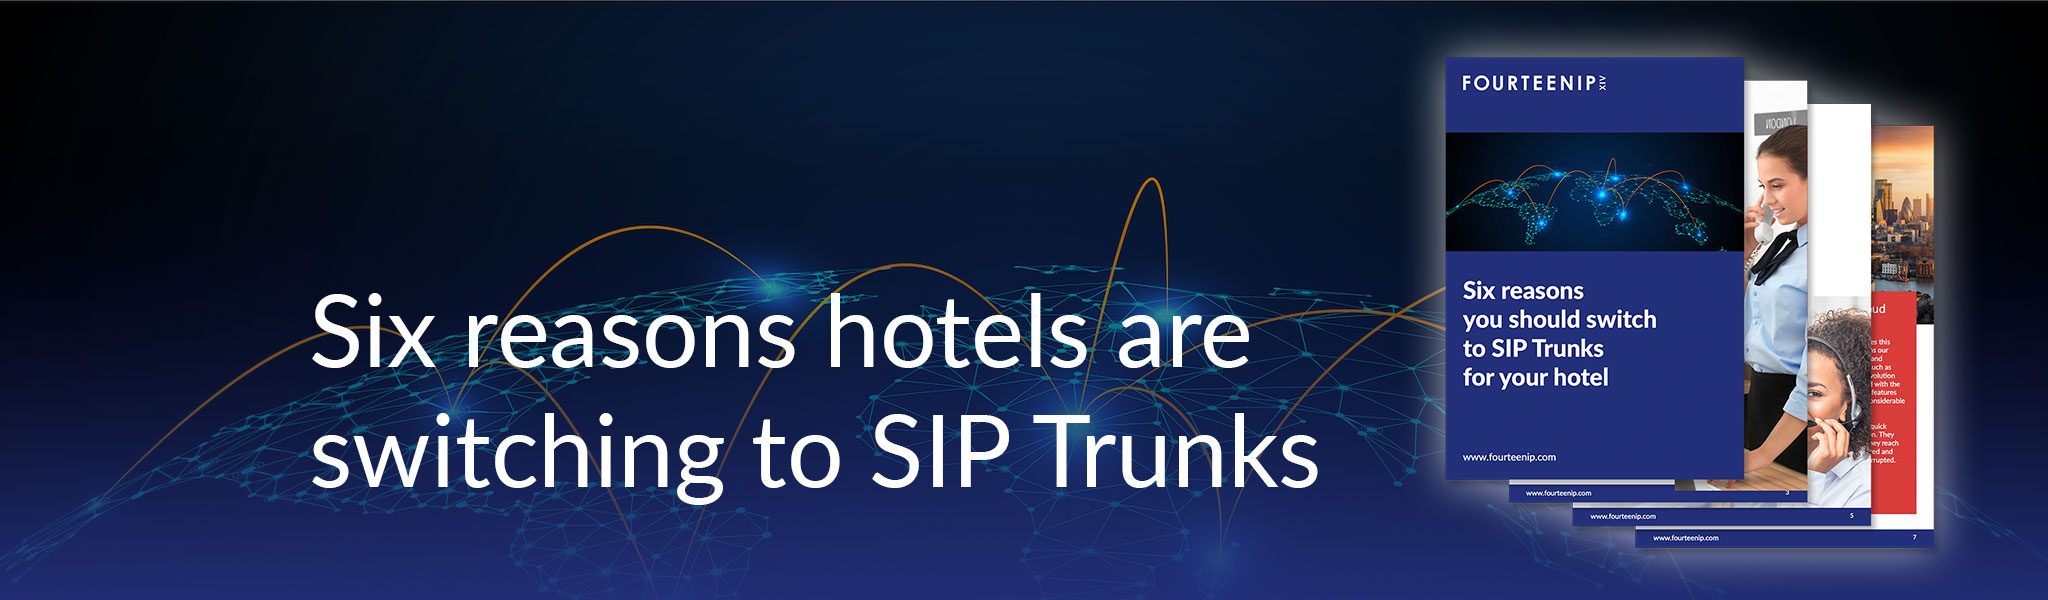 sip-trunks-for-hotels